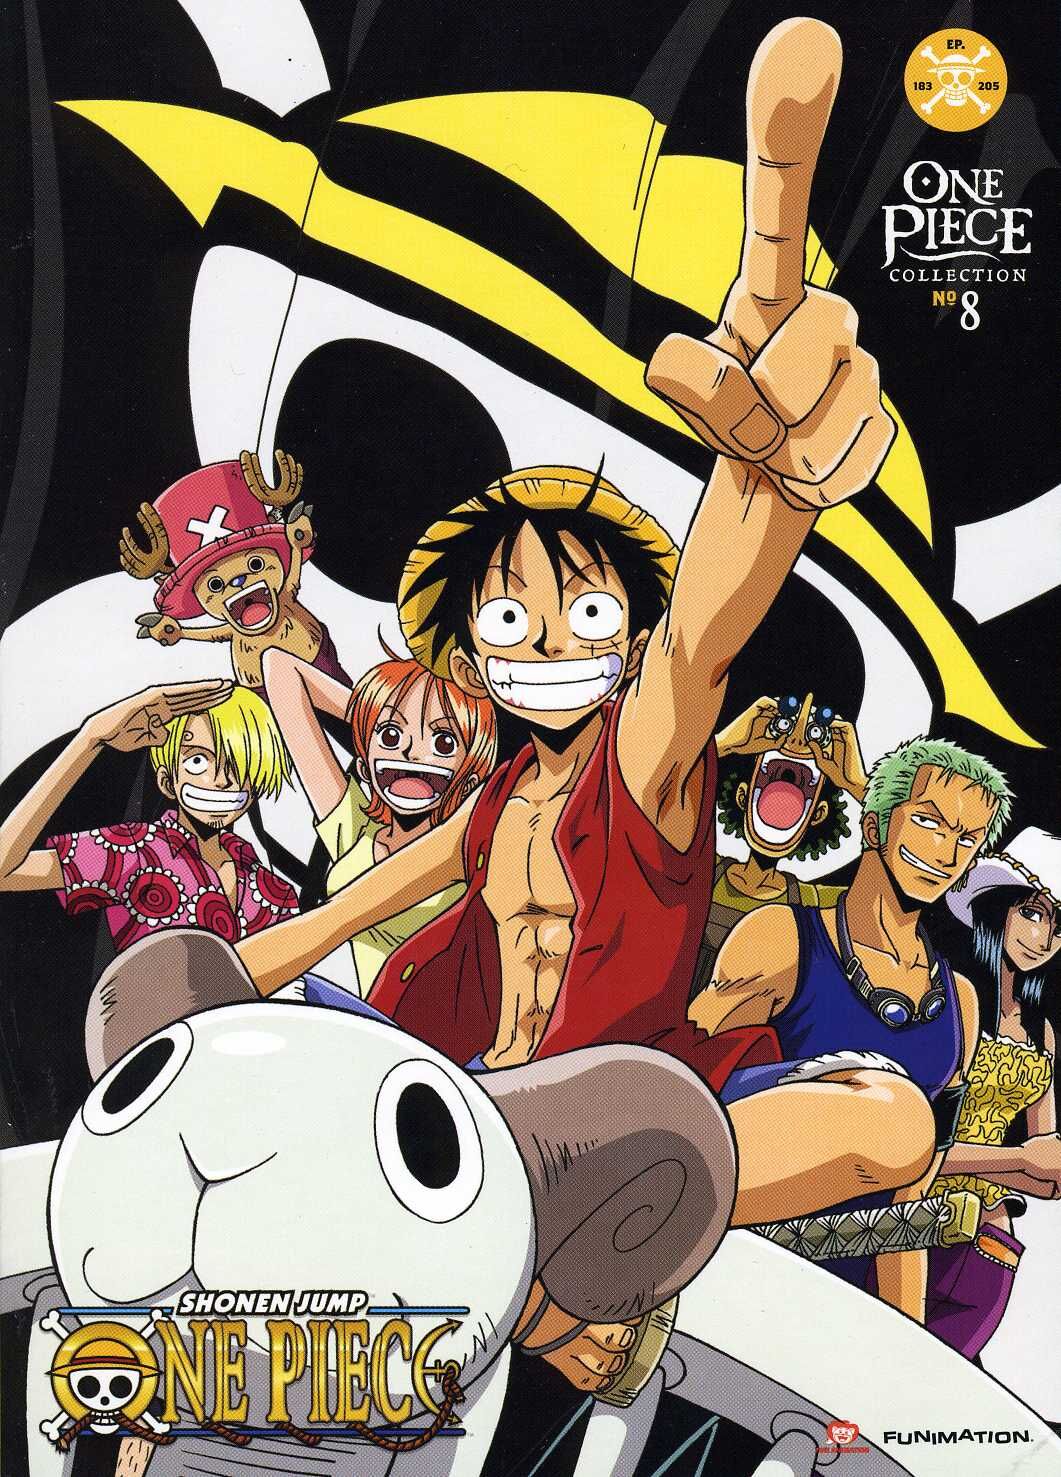 One Piece Casts Jonah Scott as the English Dub Voice Actor for Katakuri  Charlotte  Anime Corner